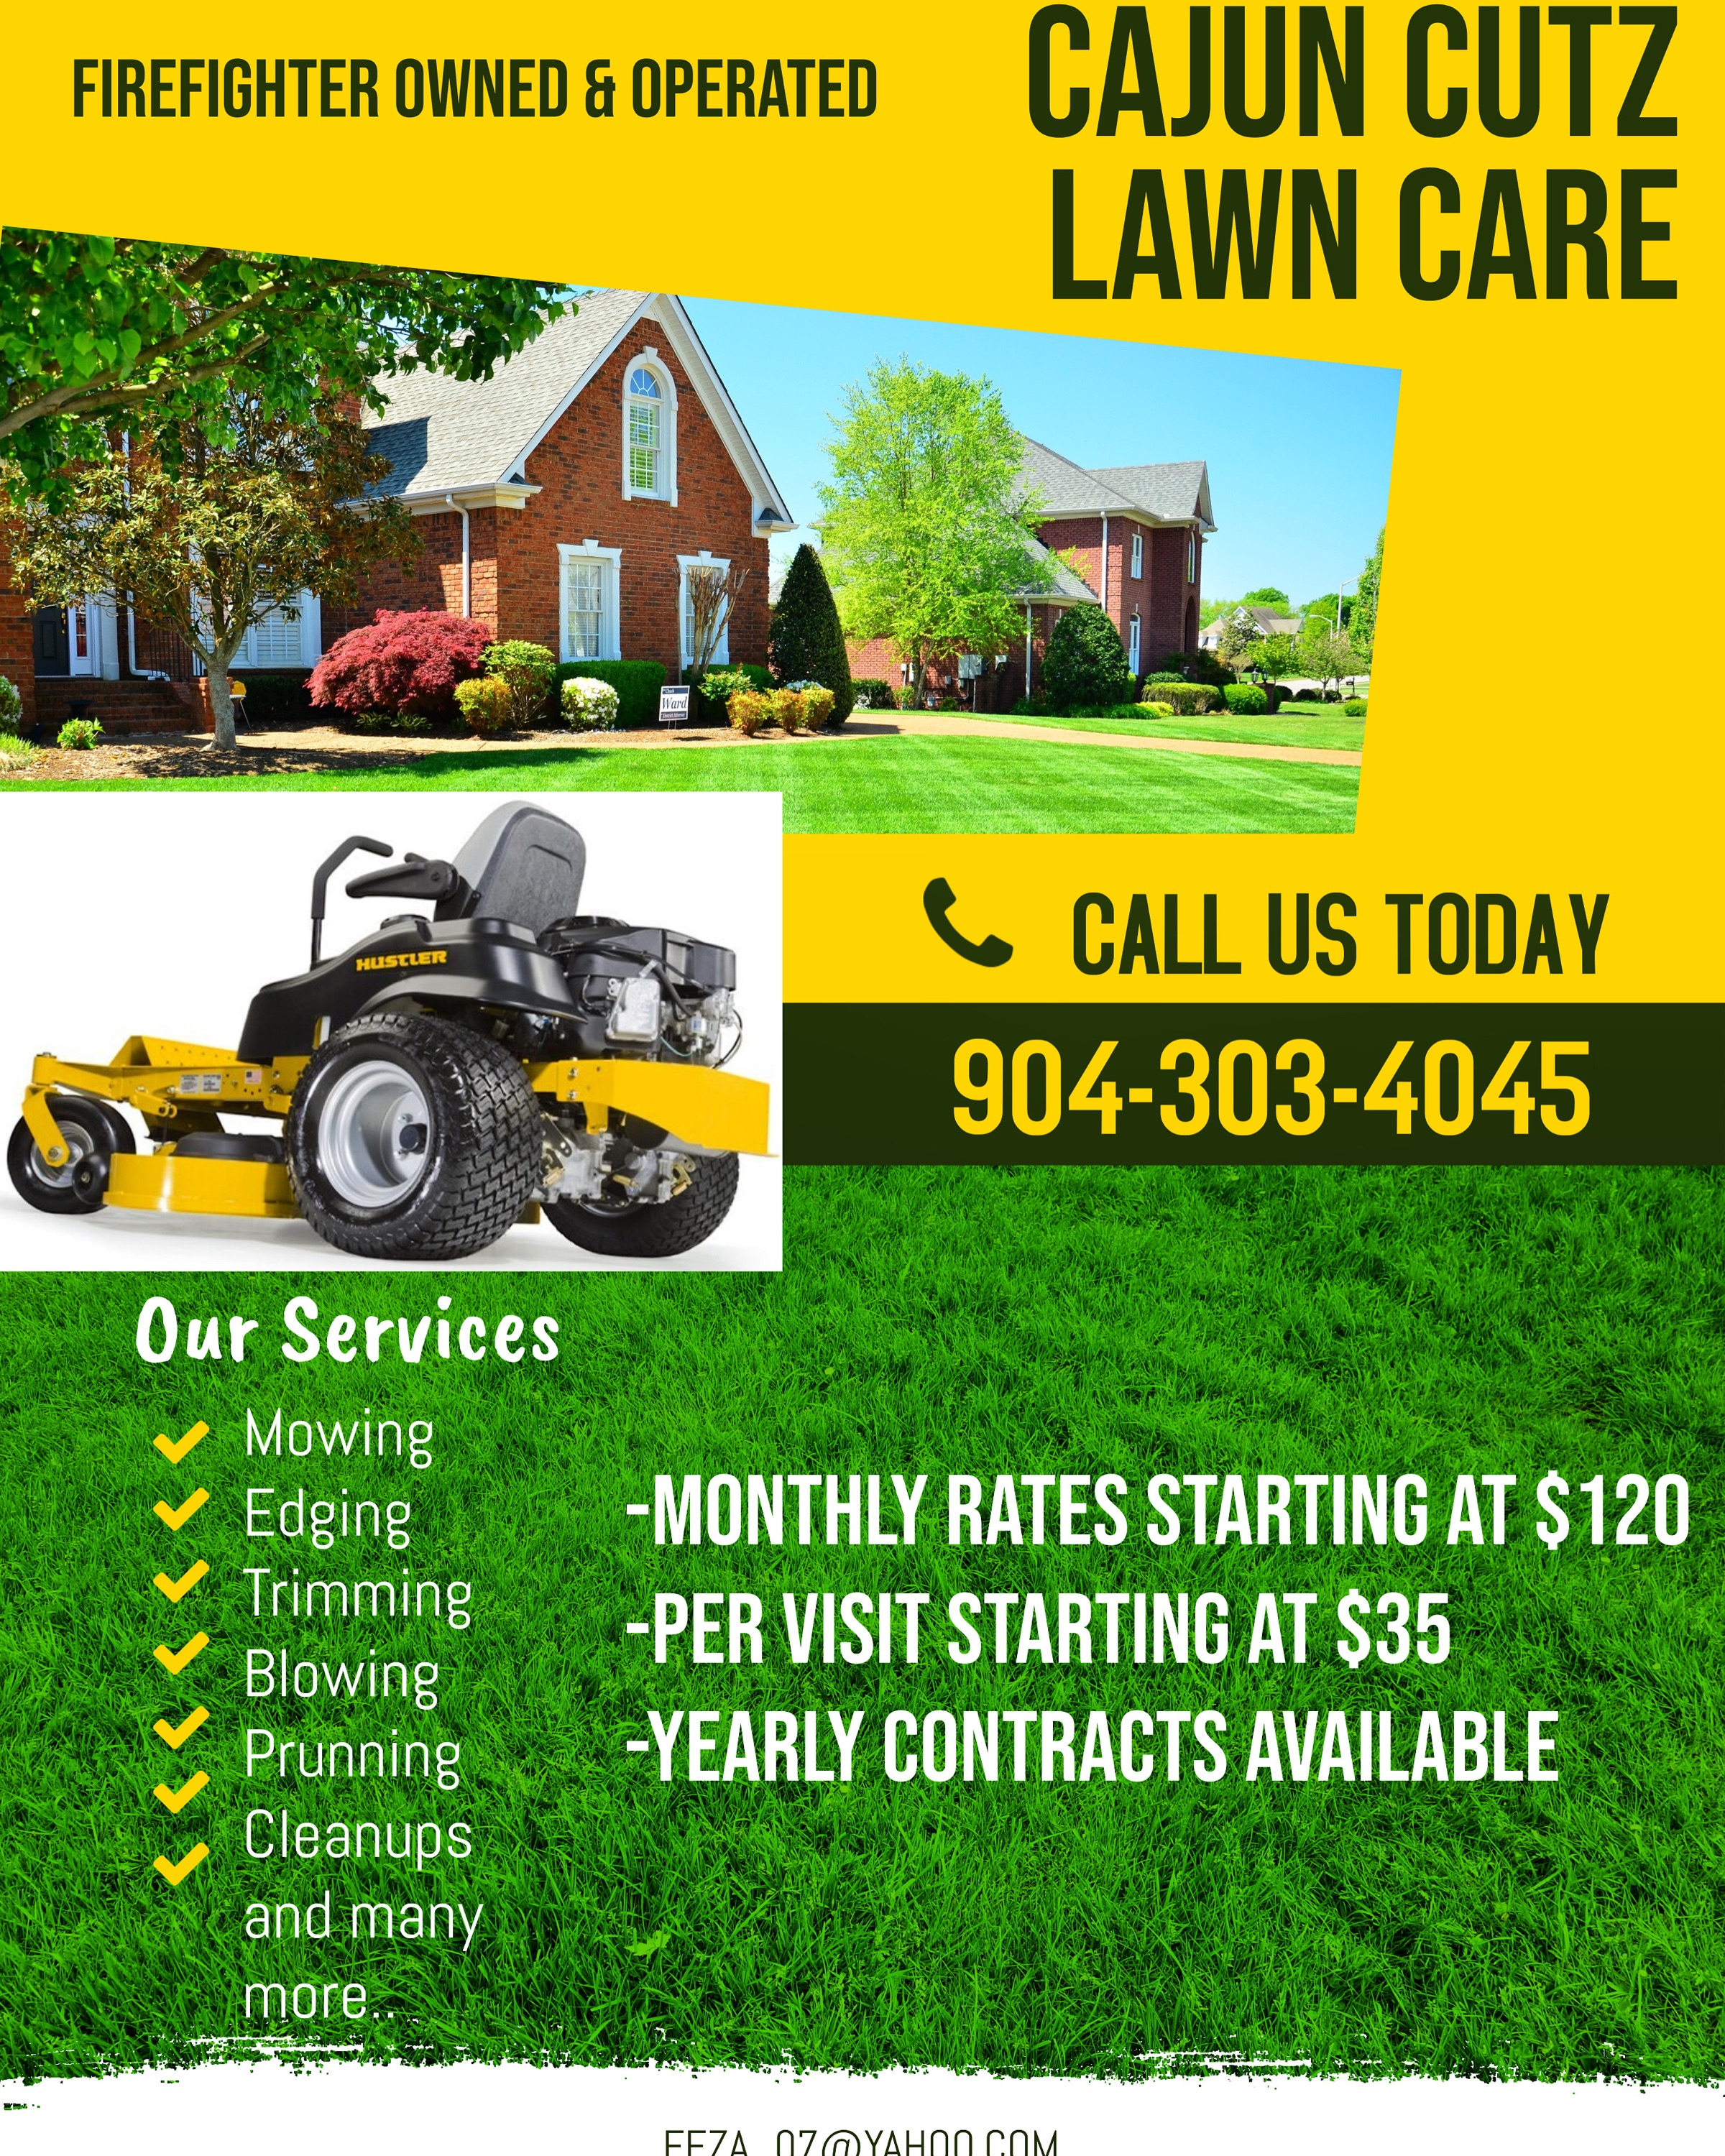 Cajun Cutz Lawn Care Logo